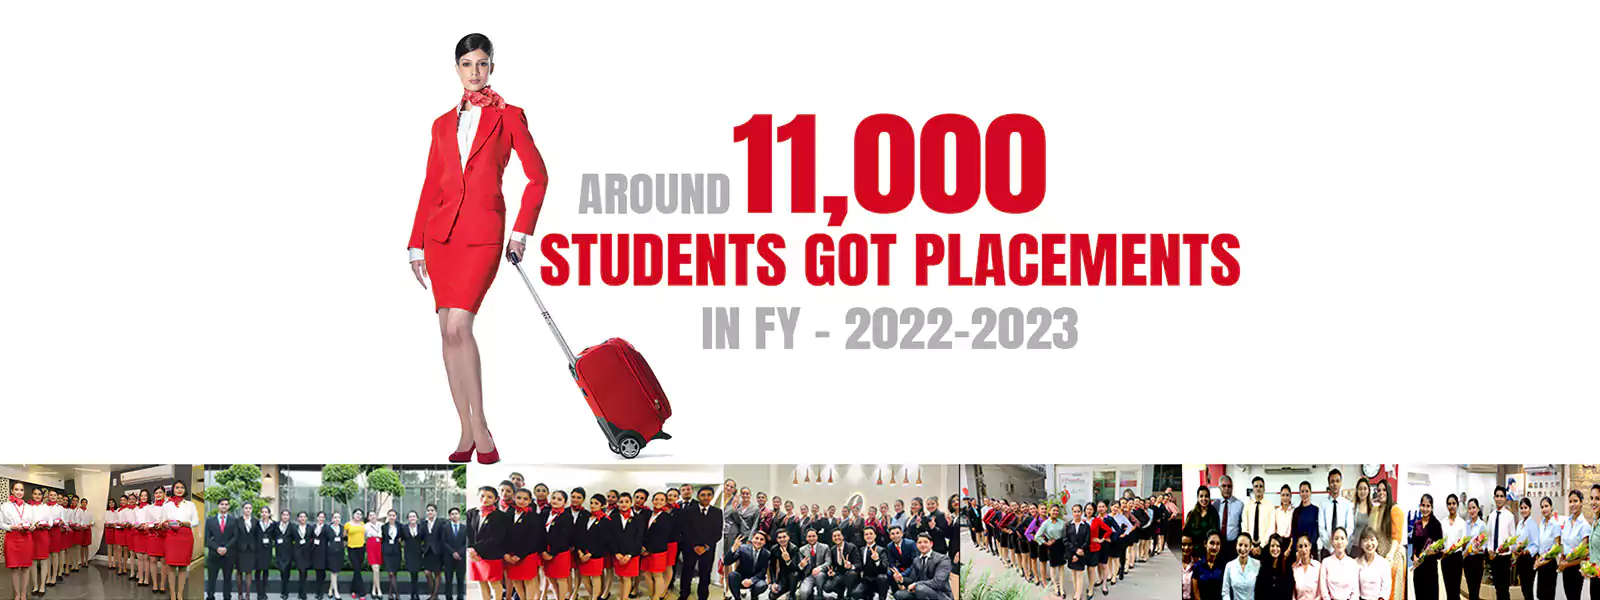 Around 11,000 Students Got Placements In FY - 2022-2023 -Frankfinn